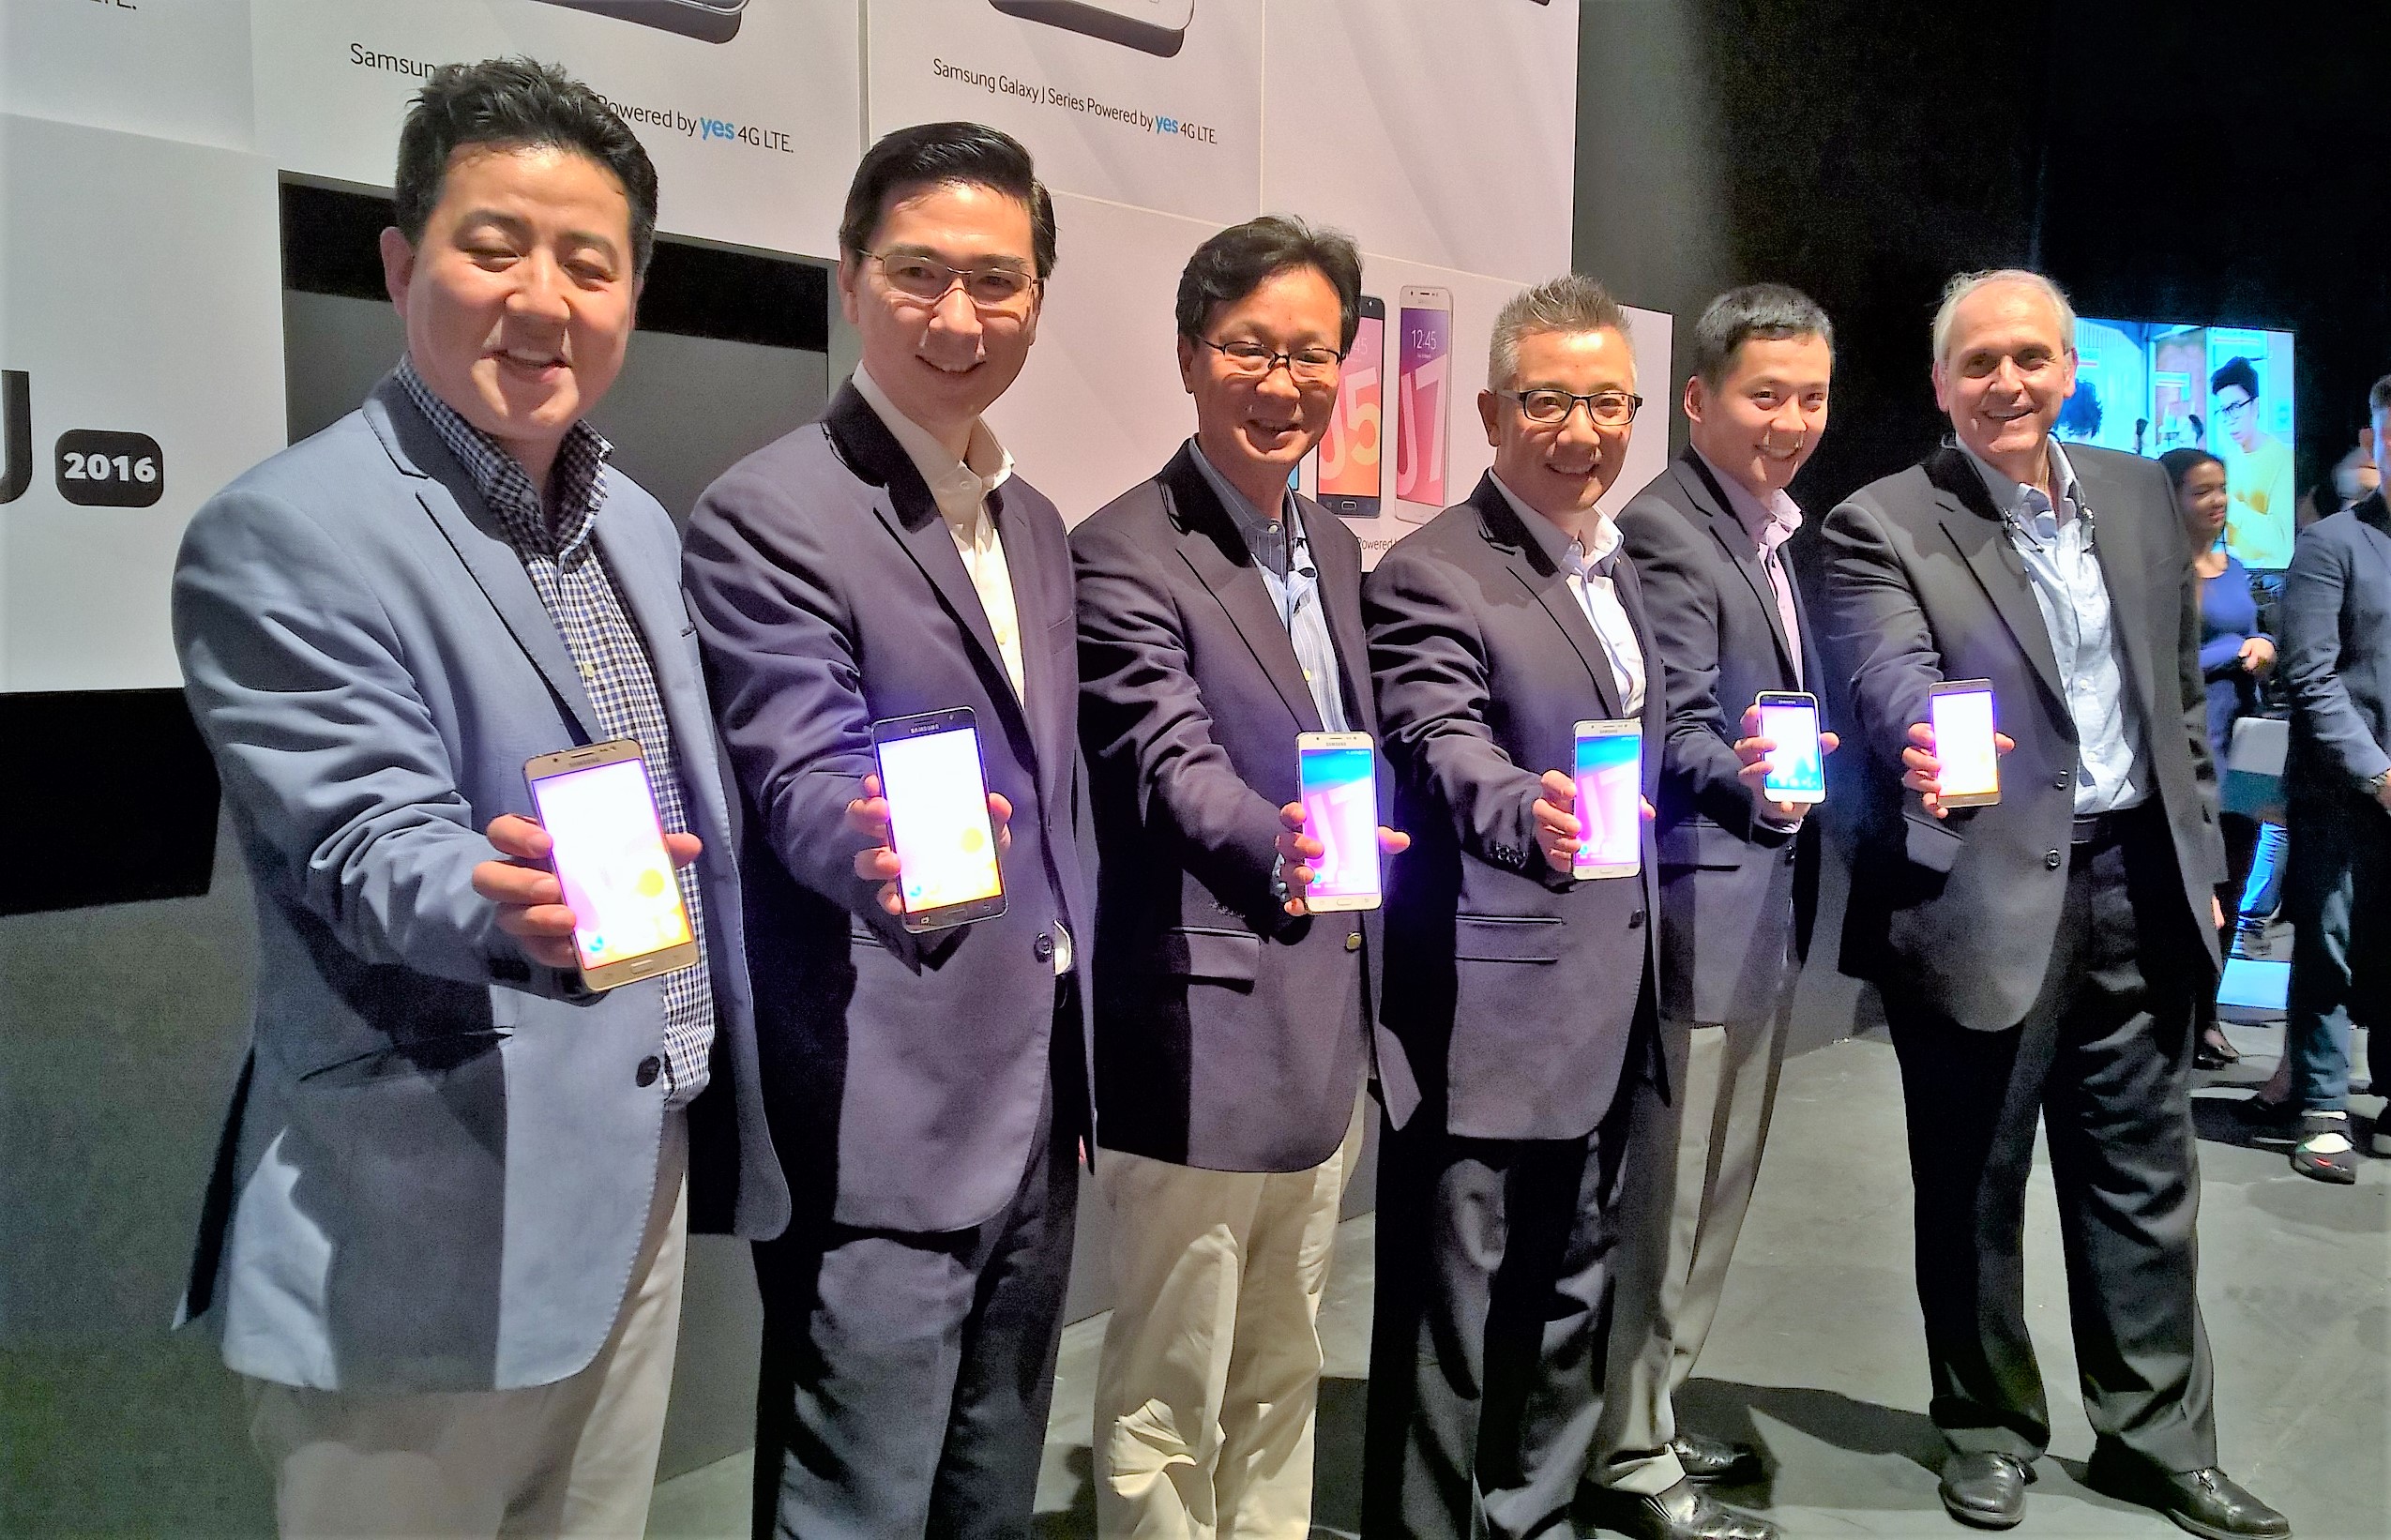 Samsung Malaysia on Galaxy J Event